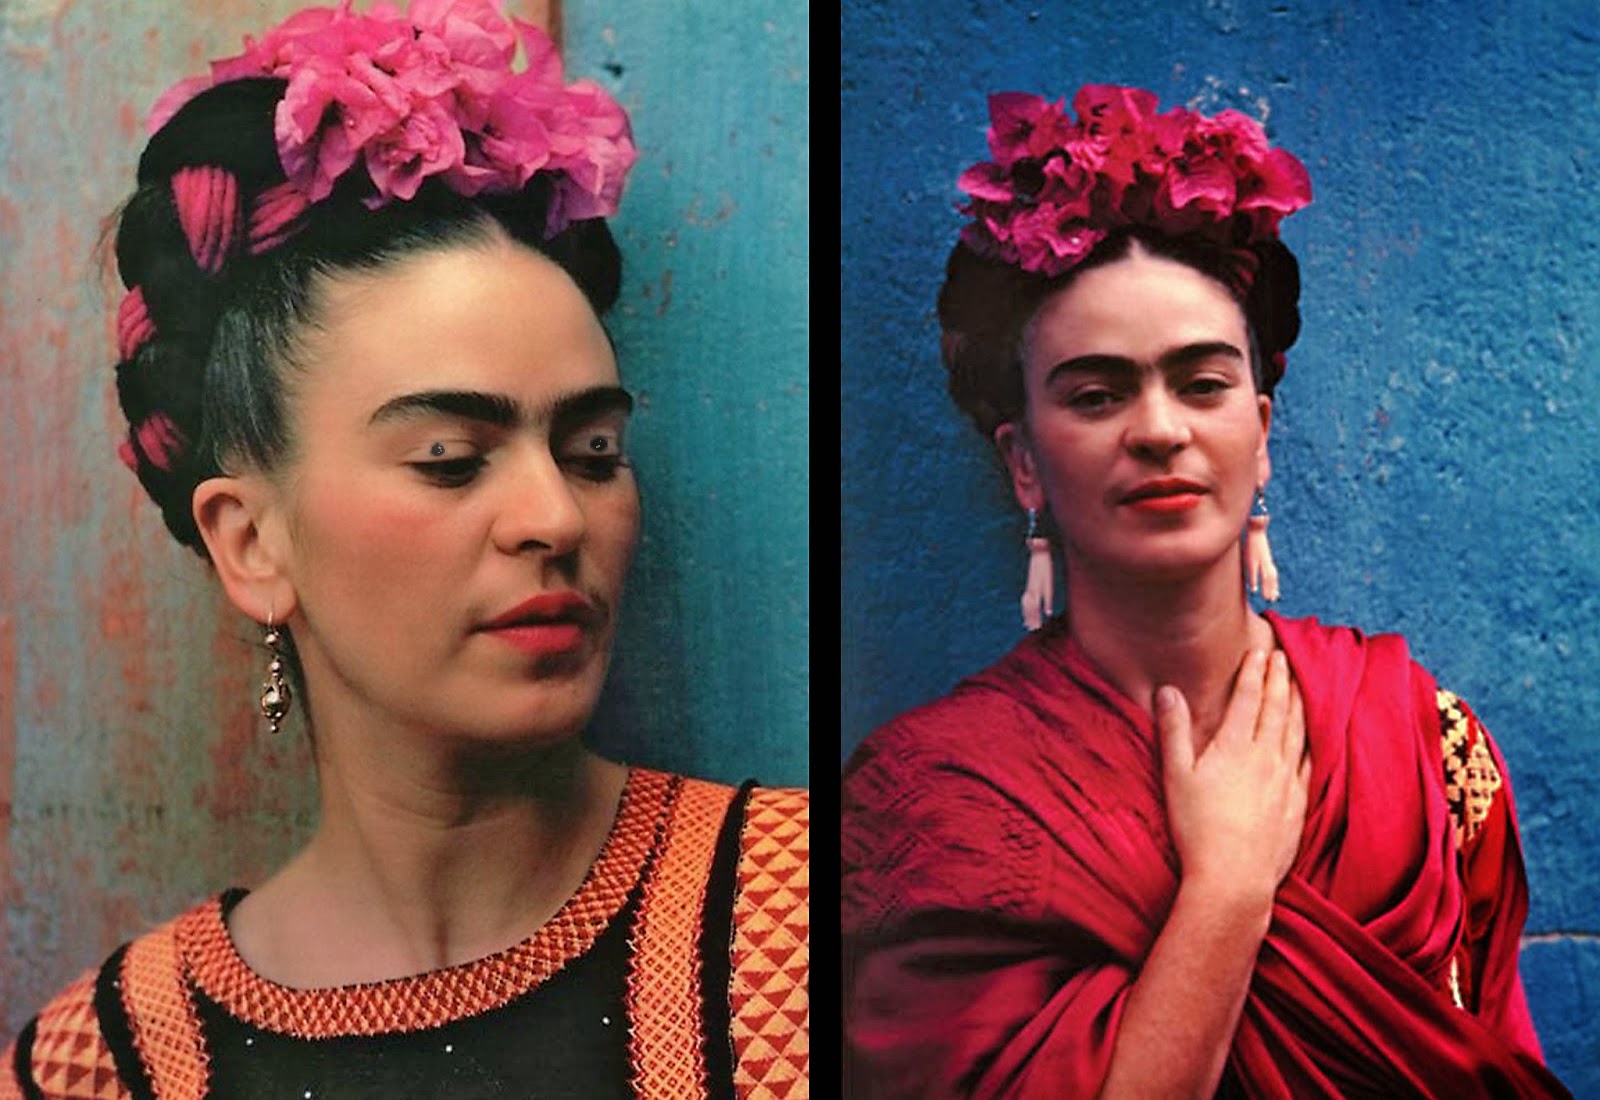 Frida, Pinche Vida: Post 7: My view of Frida